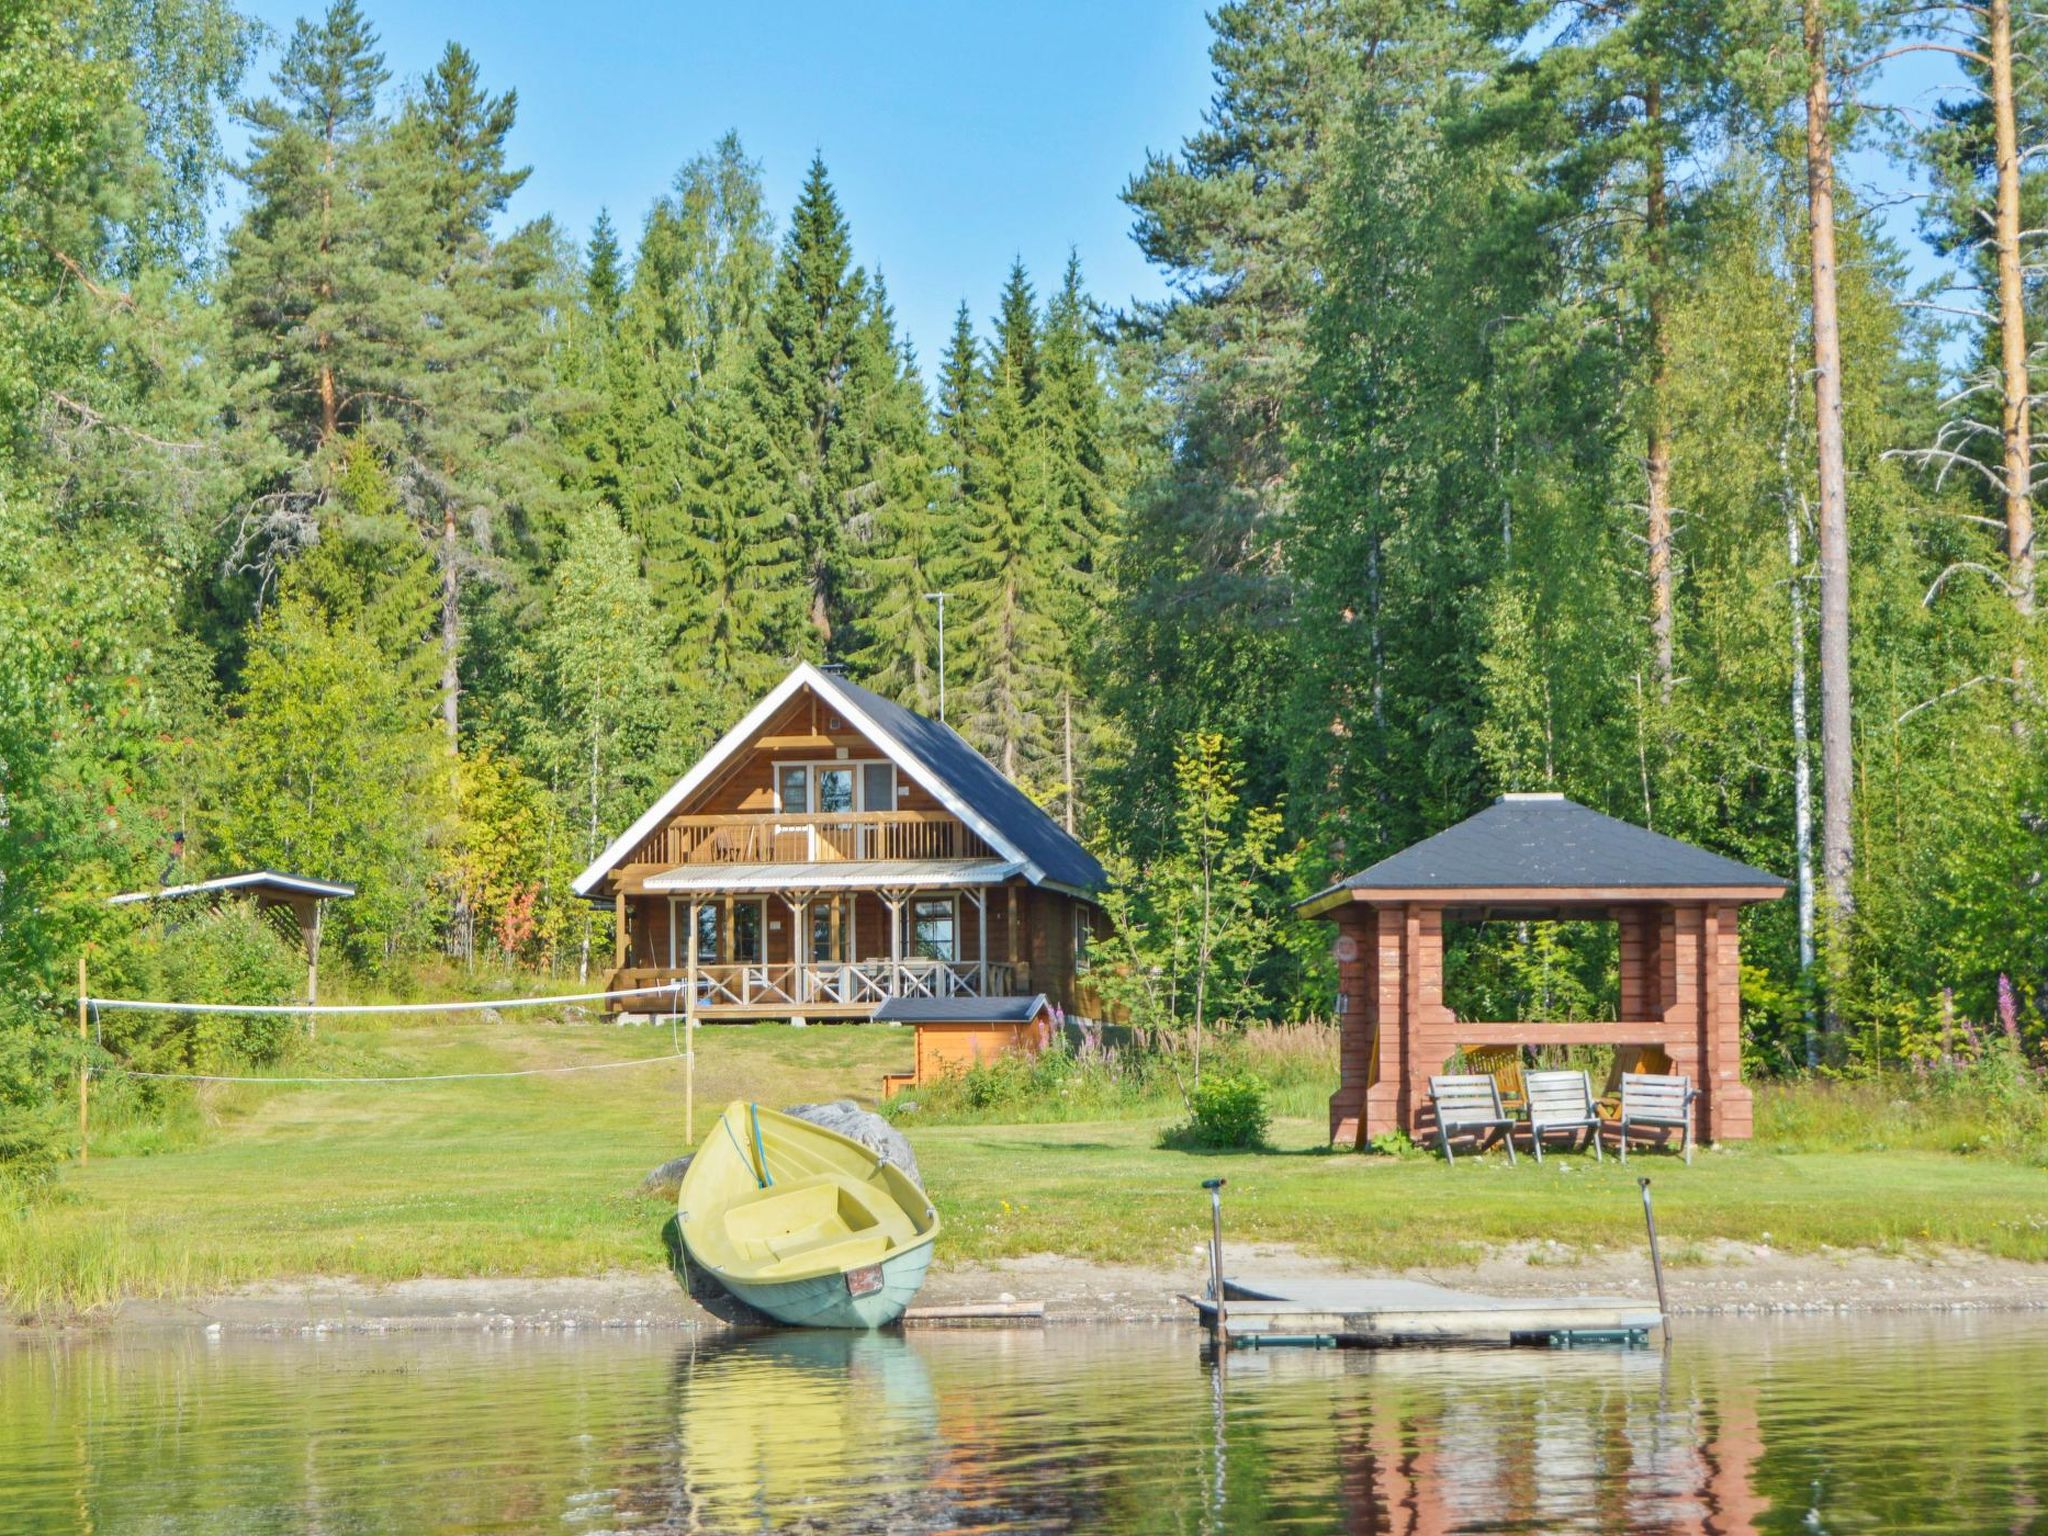 Photo 1 - 4 bedroom House in Kuopio with sauna